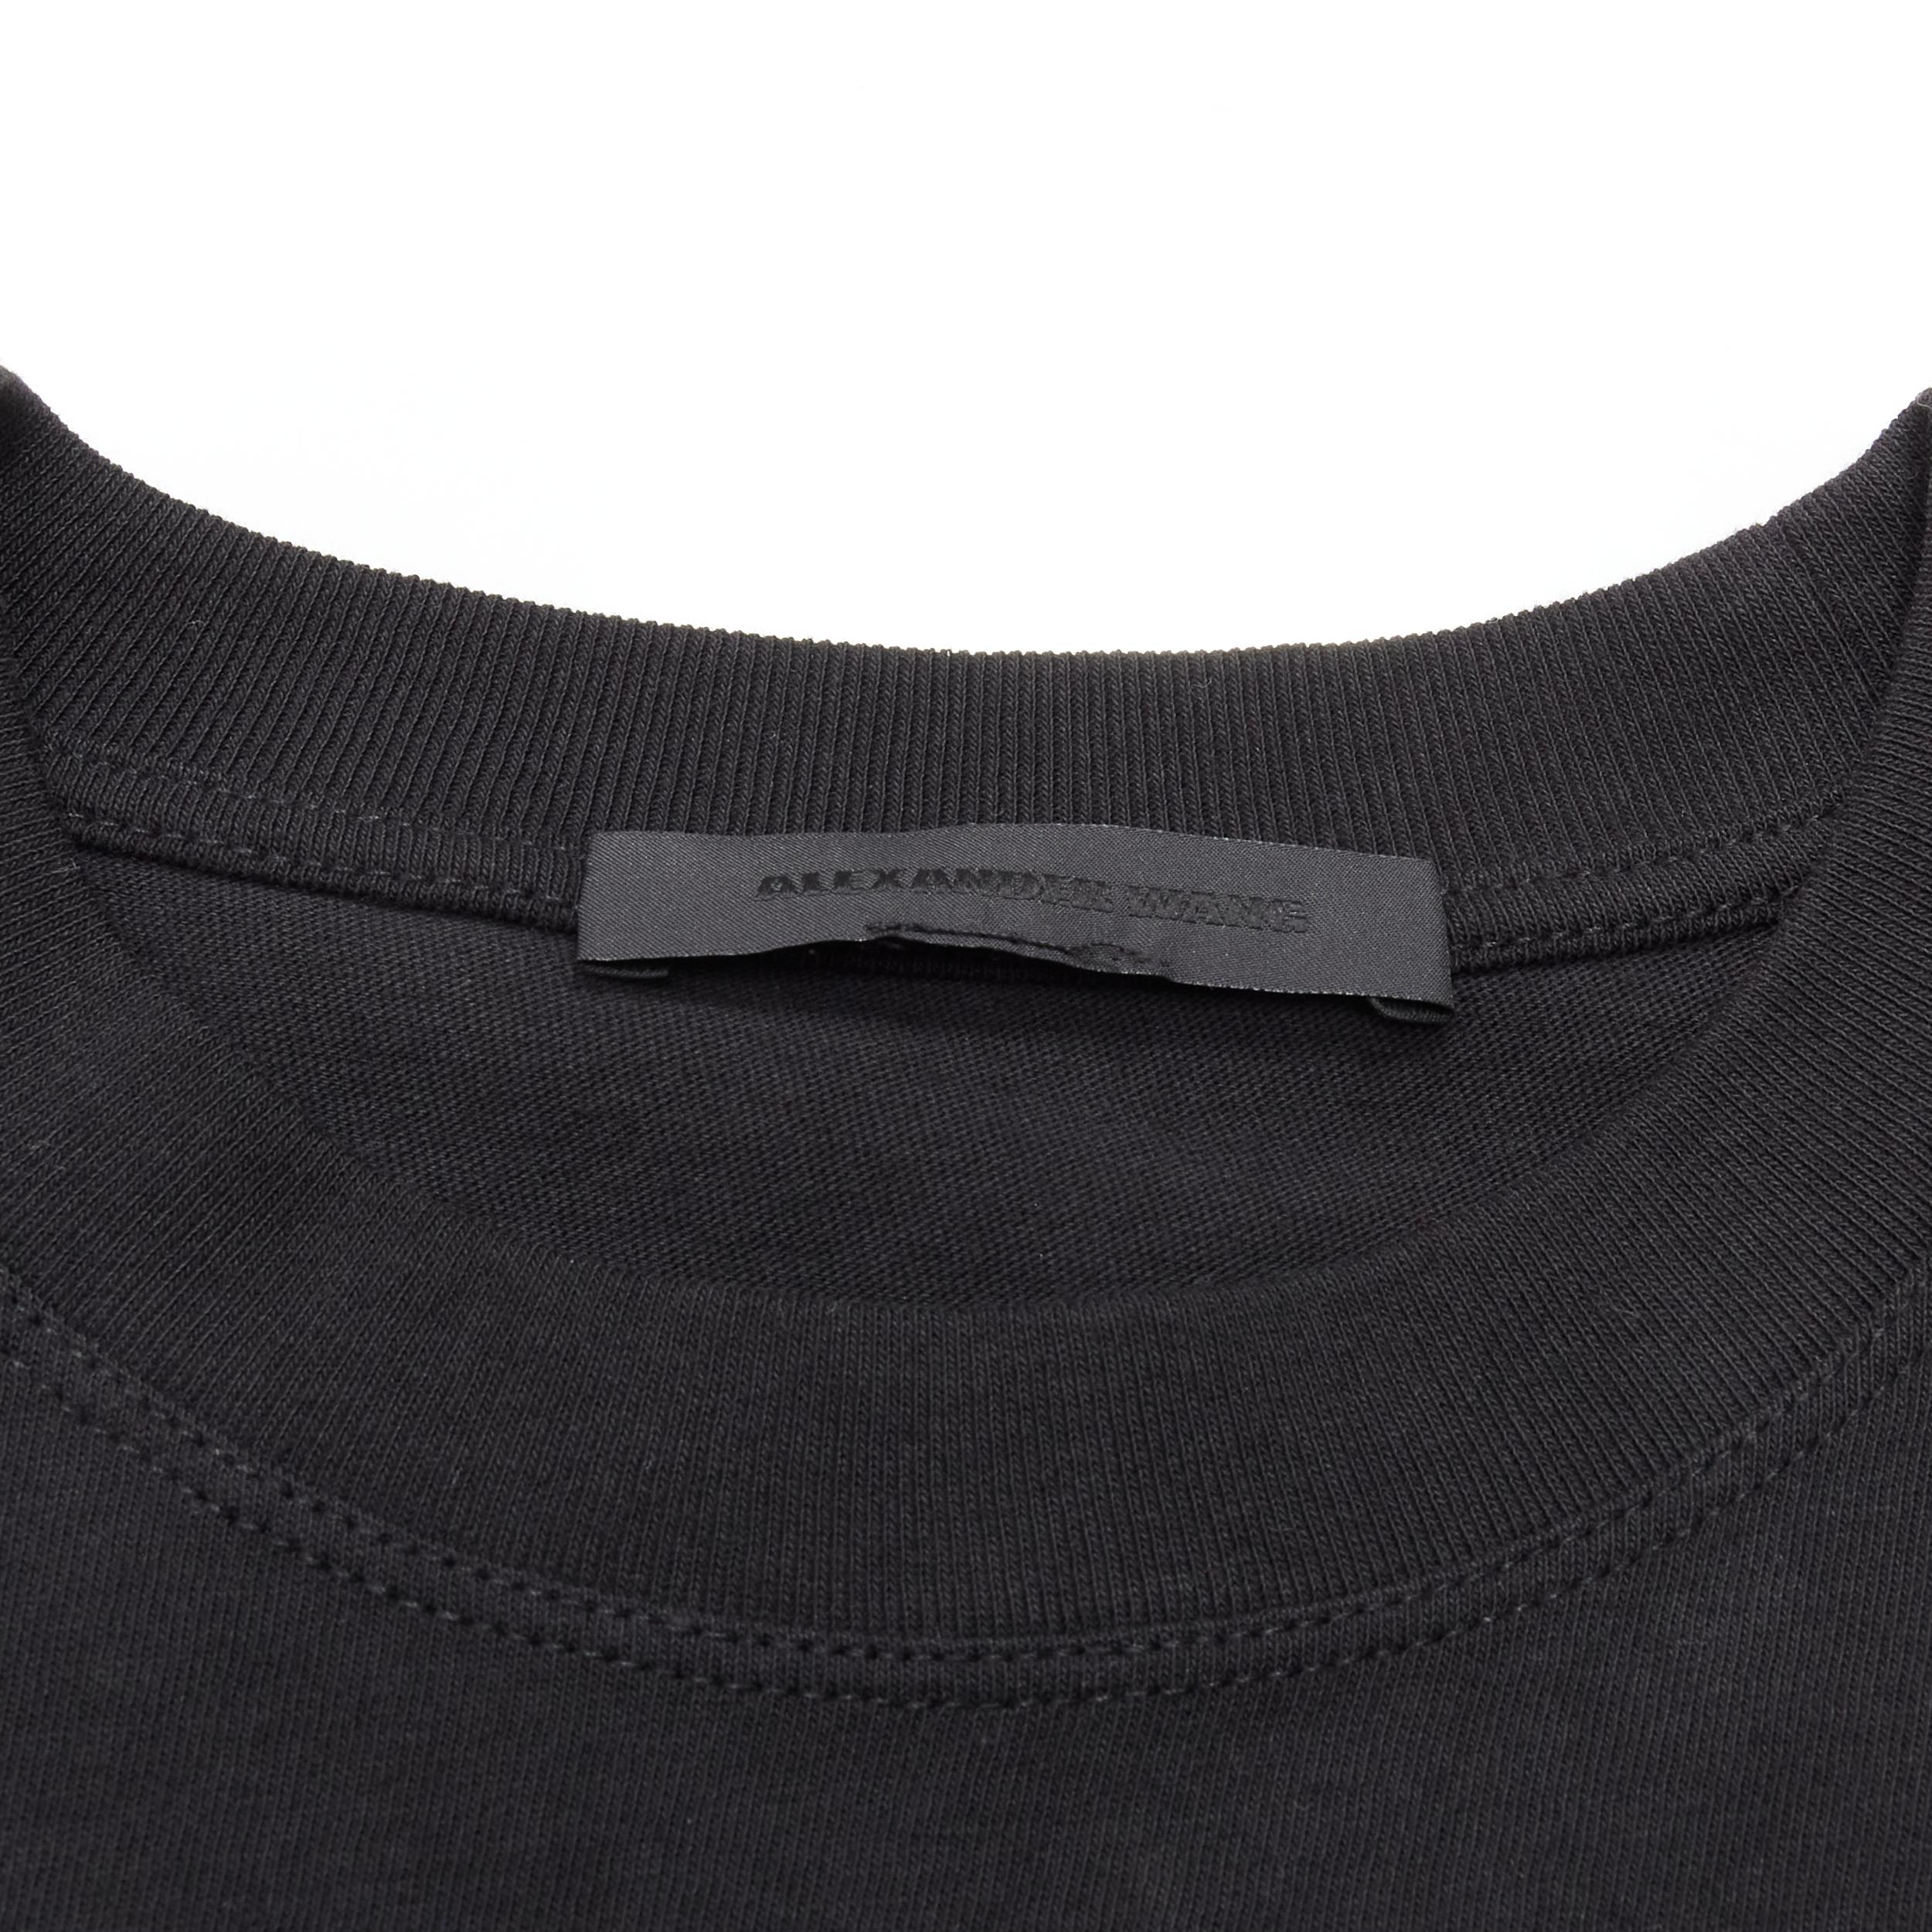 ALEXANDER WANG Black Credit Card silver letter embellished cotton tshirt S For Sale 2